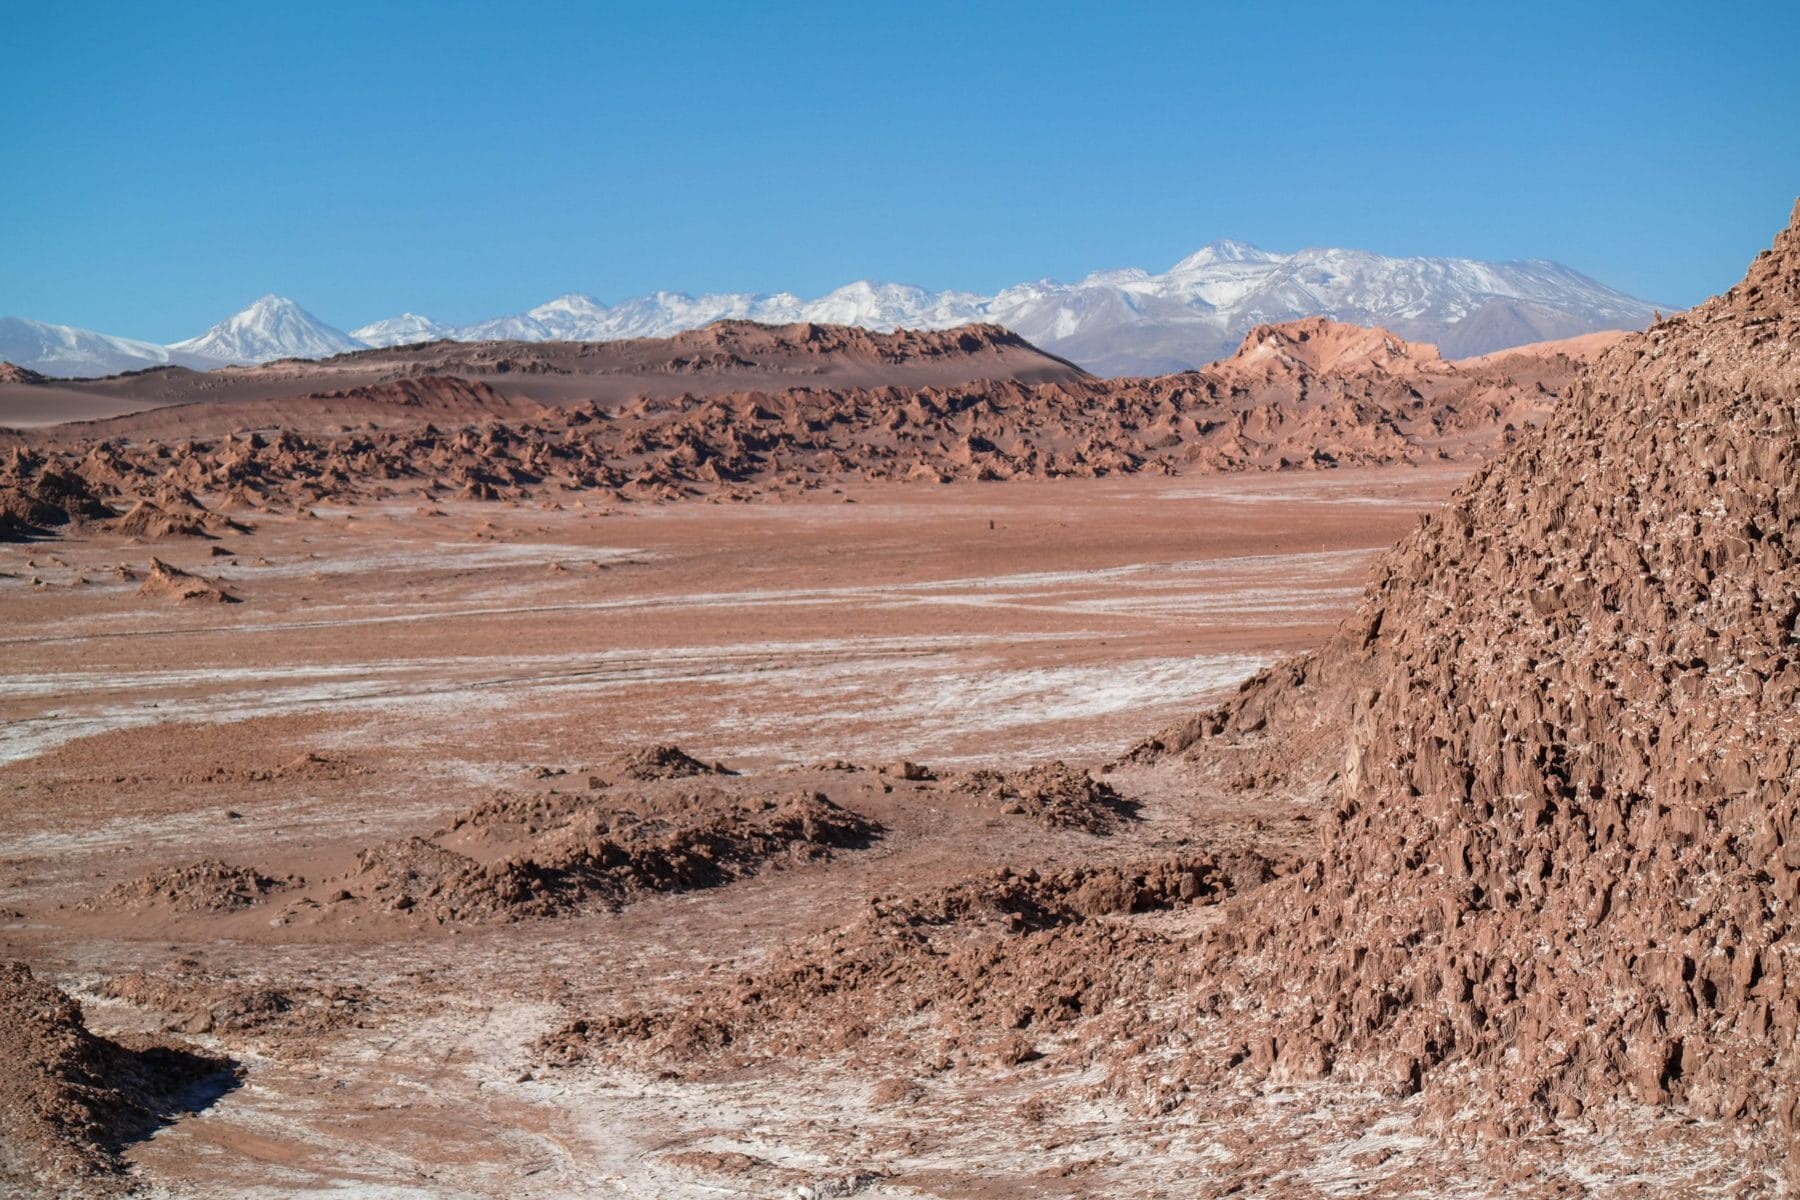 Red rock formations in the Cordillera de la Sal in the Atacama Desert.